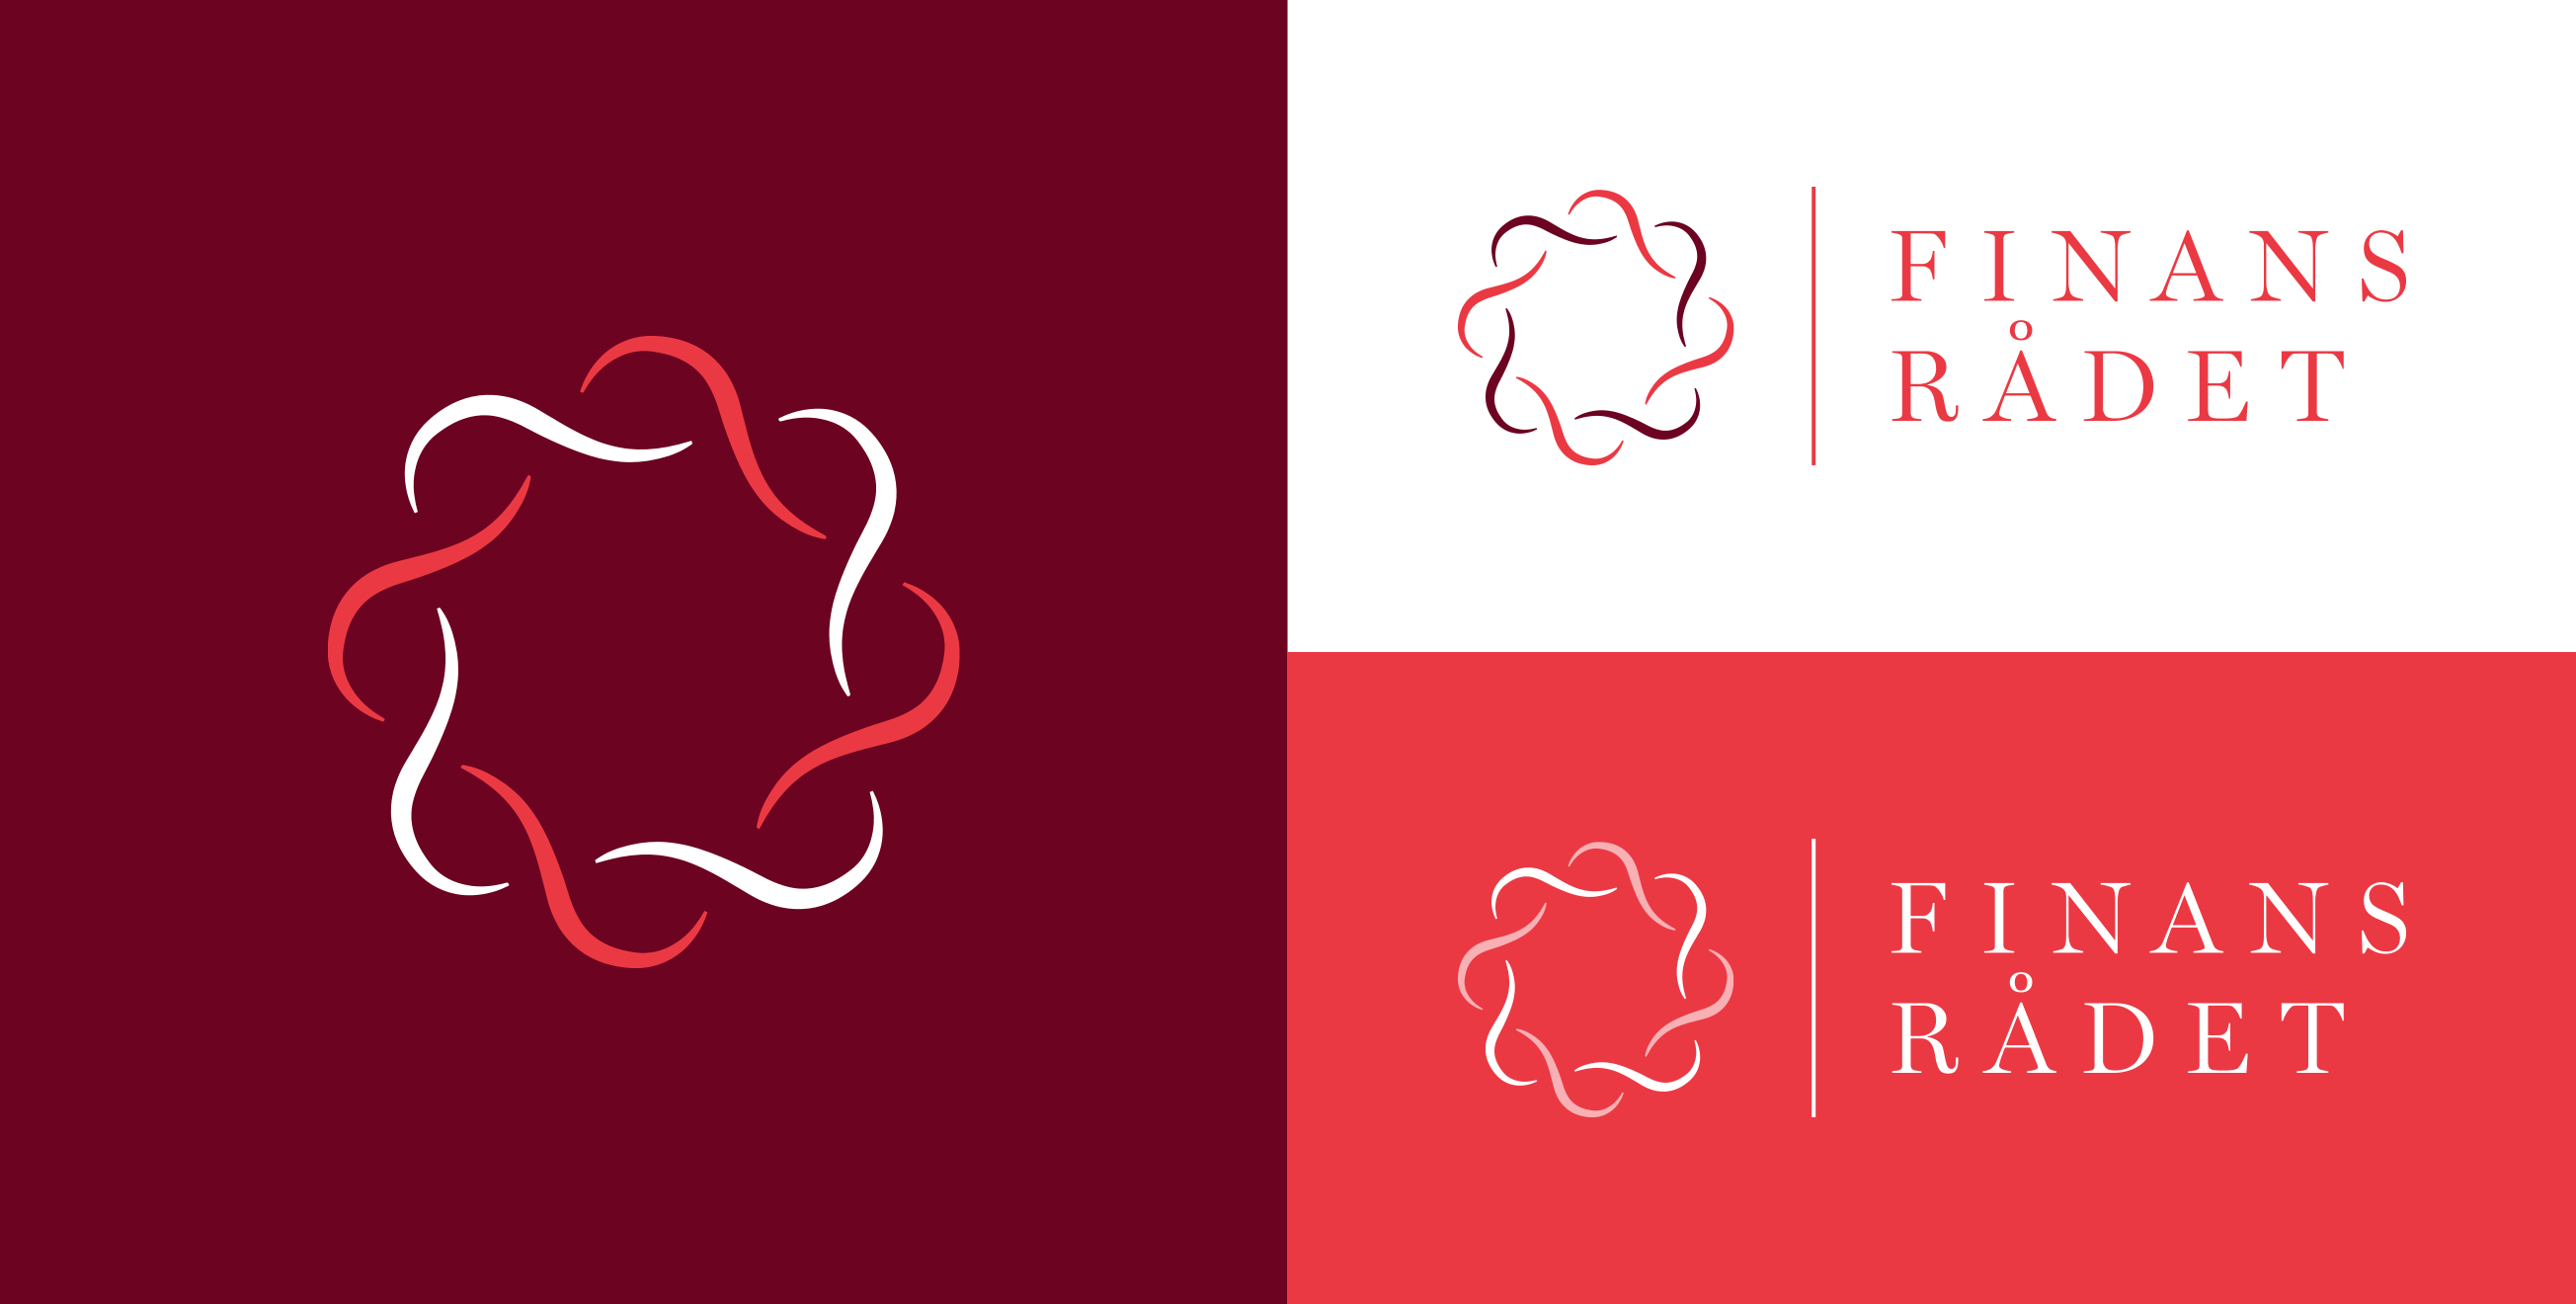 Danish Bankers Association — Logo design.